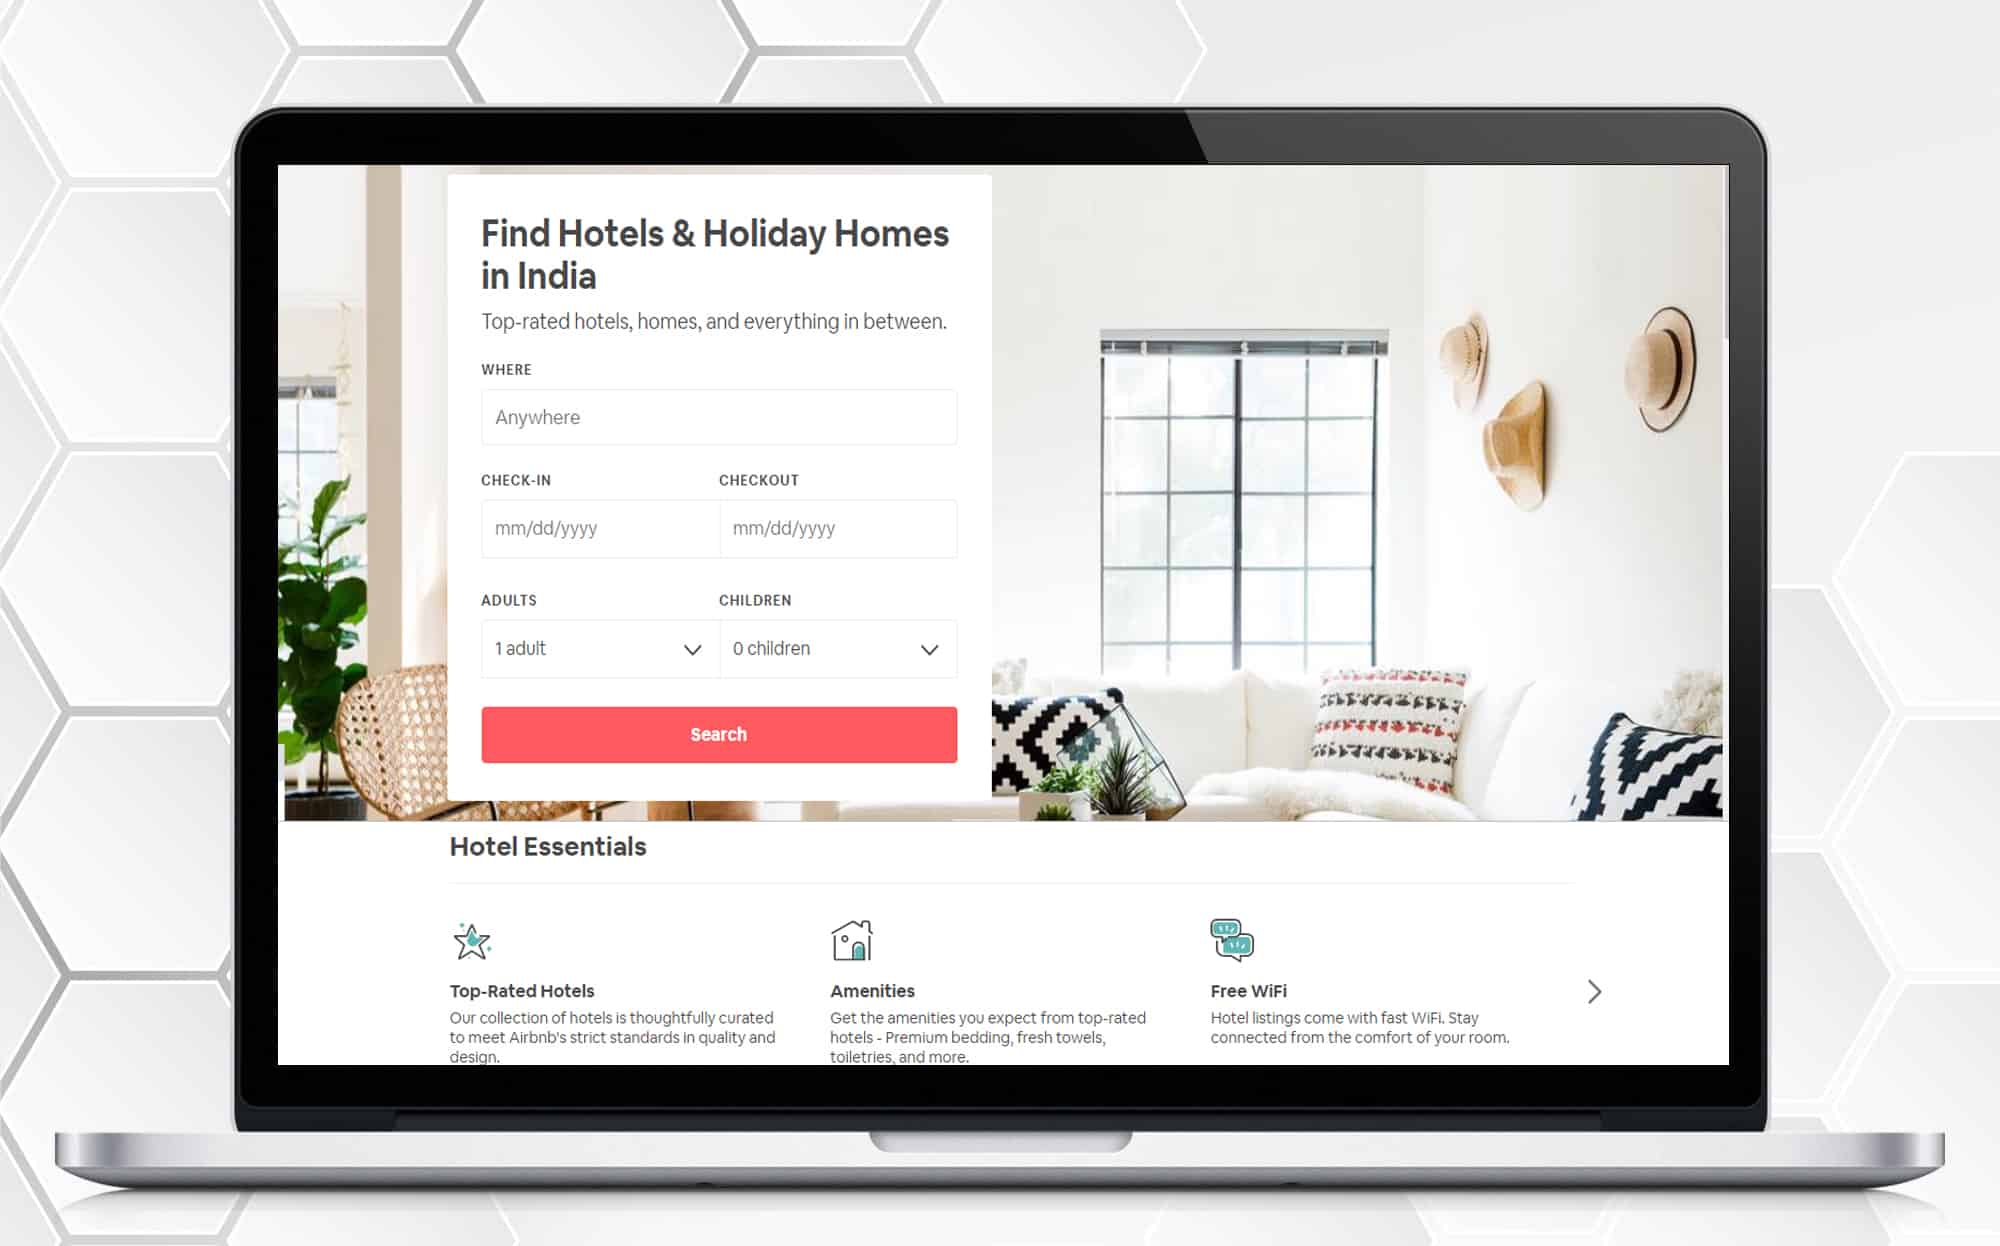 Airbnb-type hotel booking app that simplified bookings